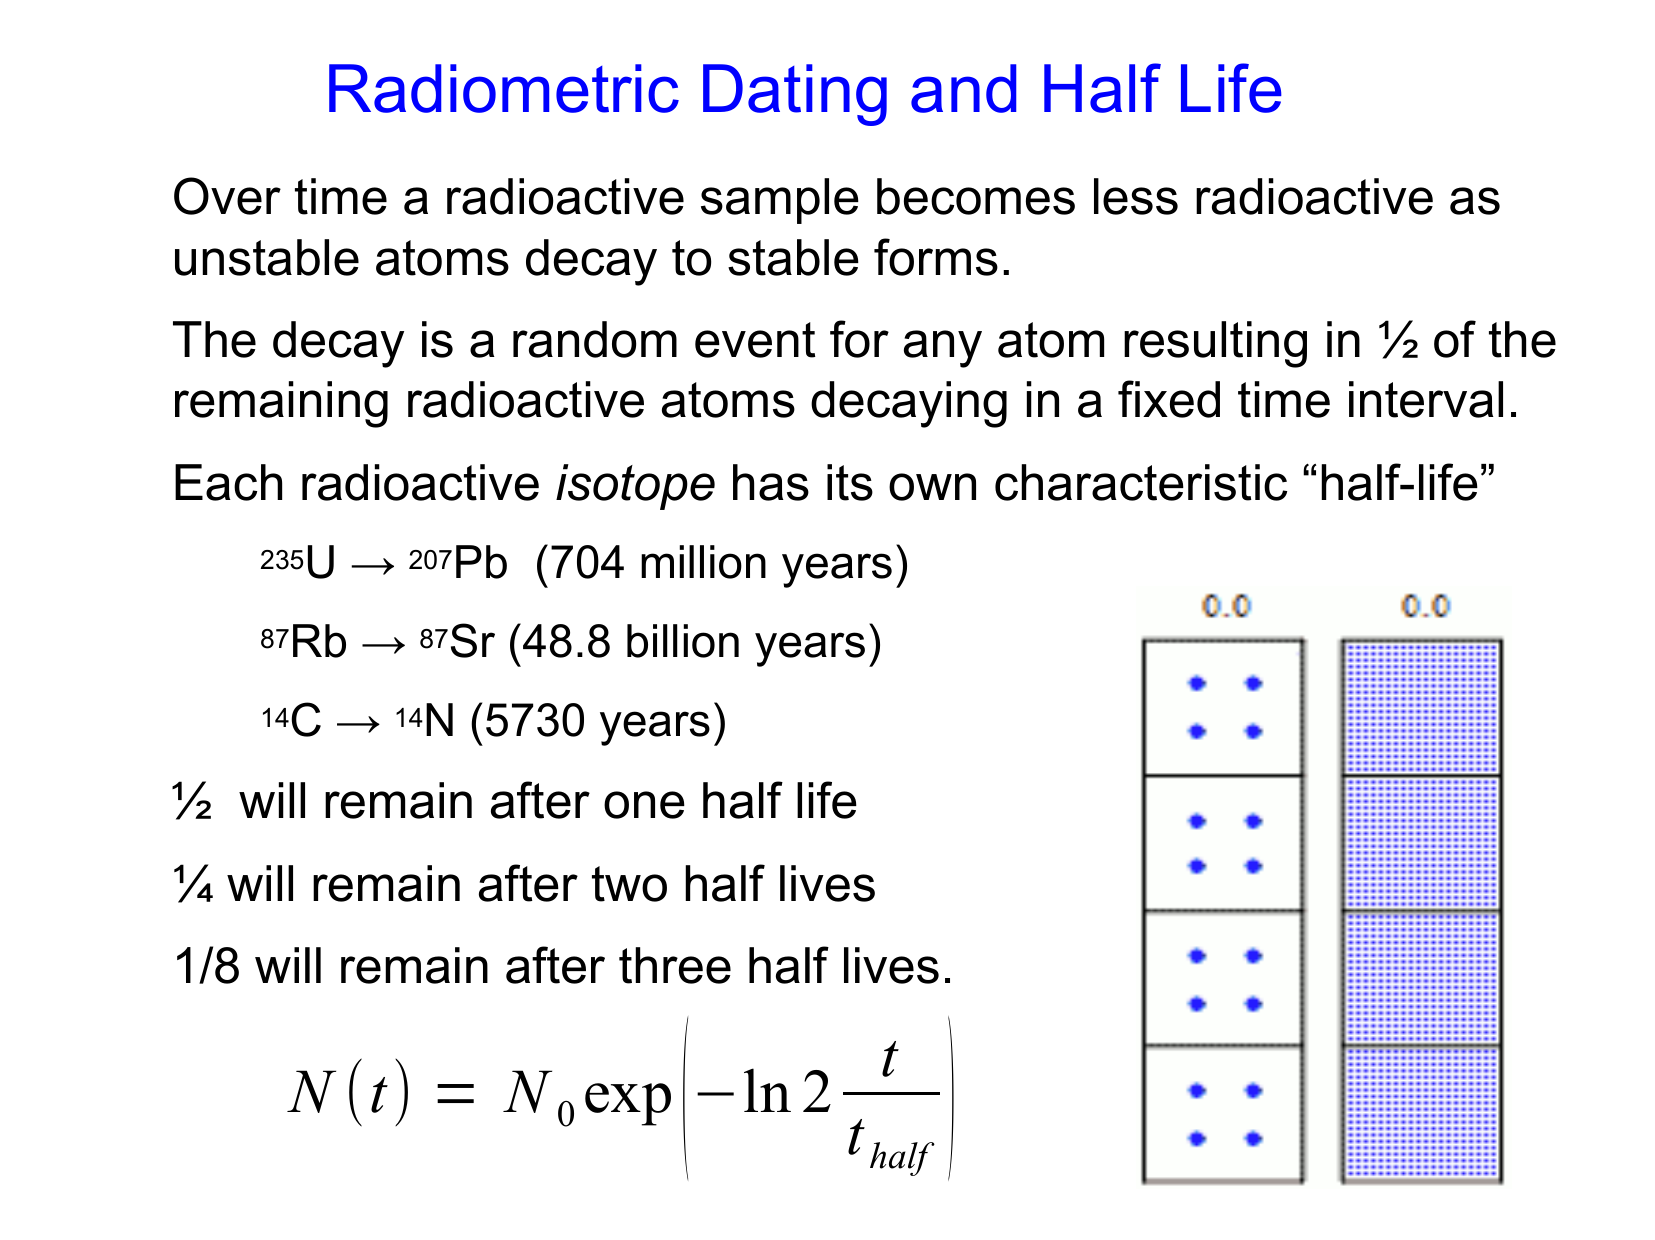 Radiometric Age-dating